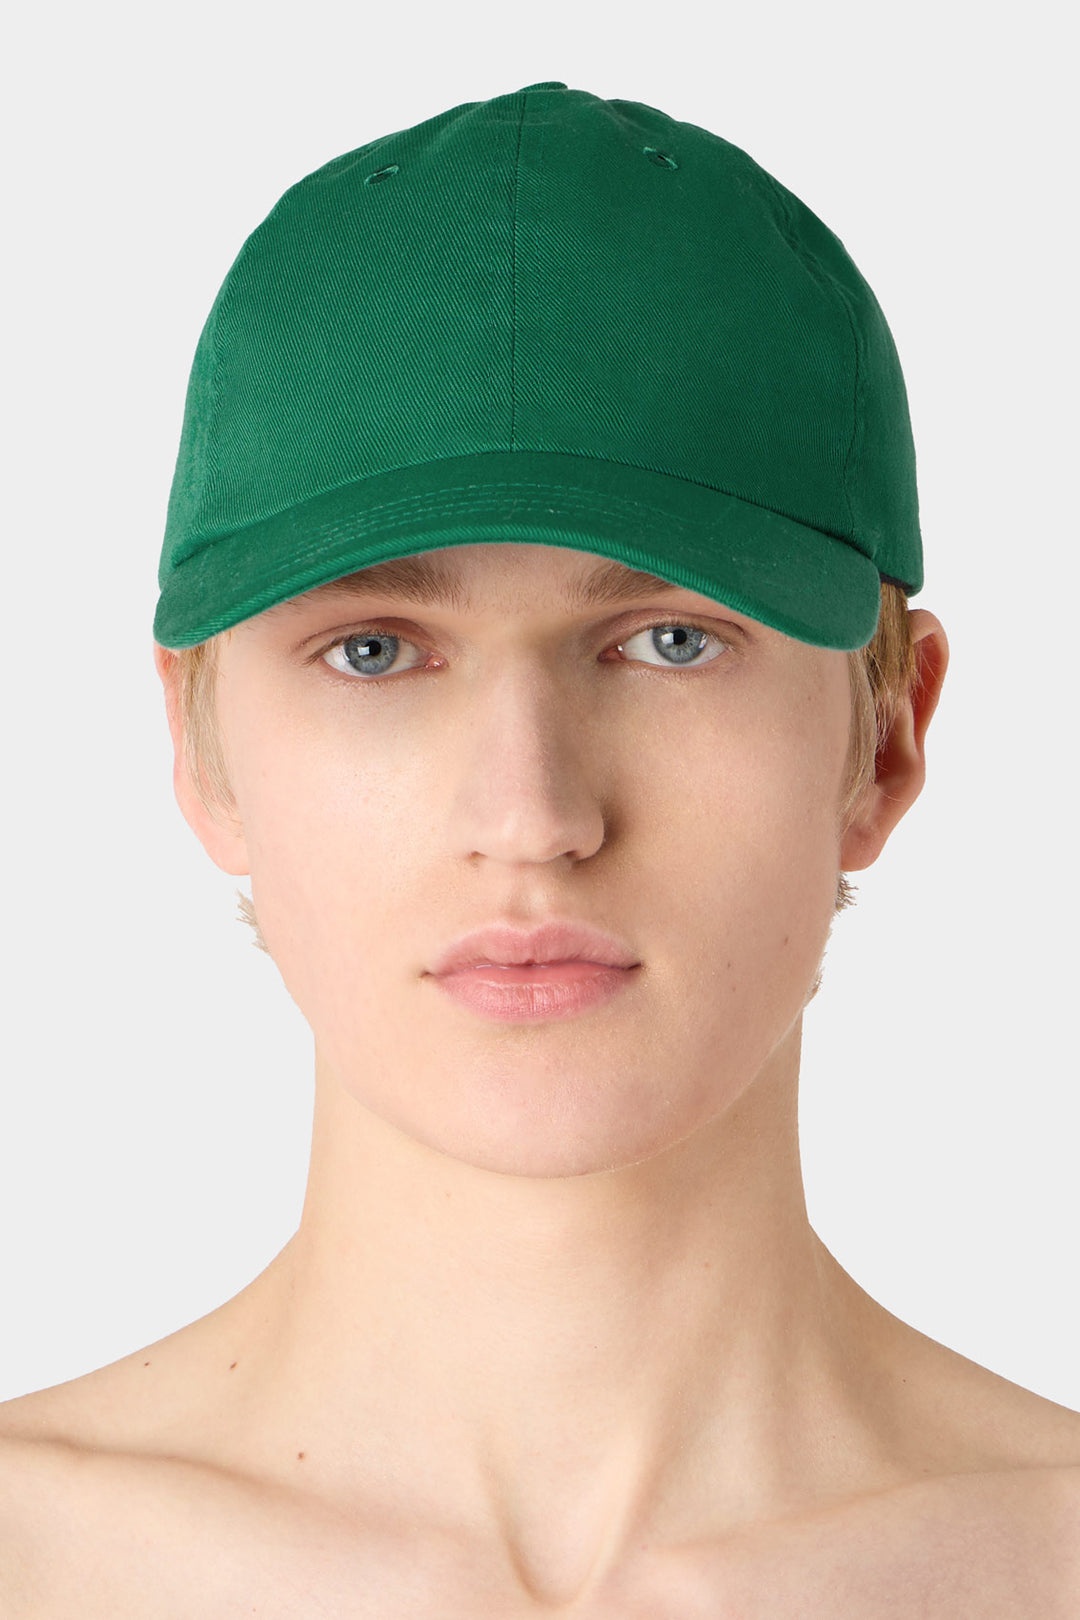 EIWS BASEBALL CAP / emerald green - 5